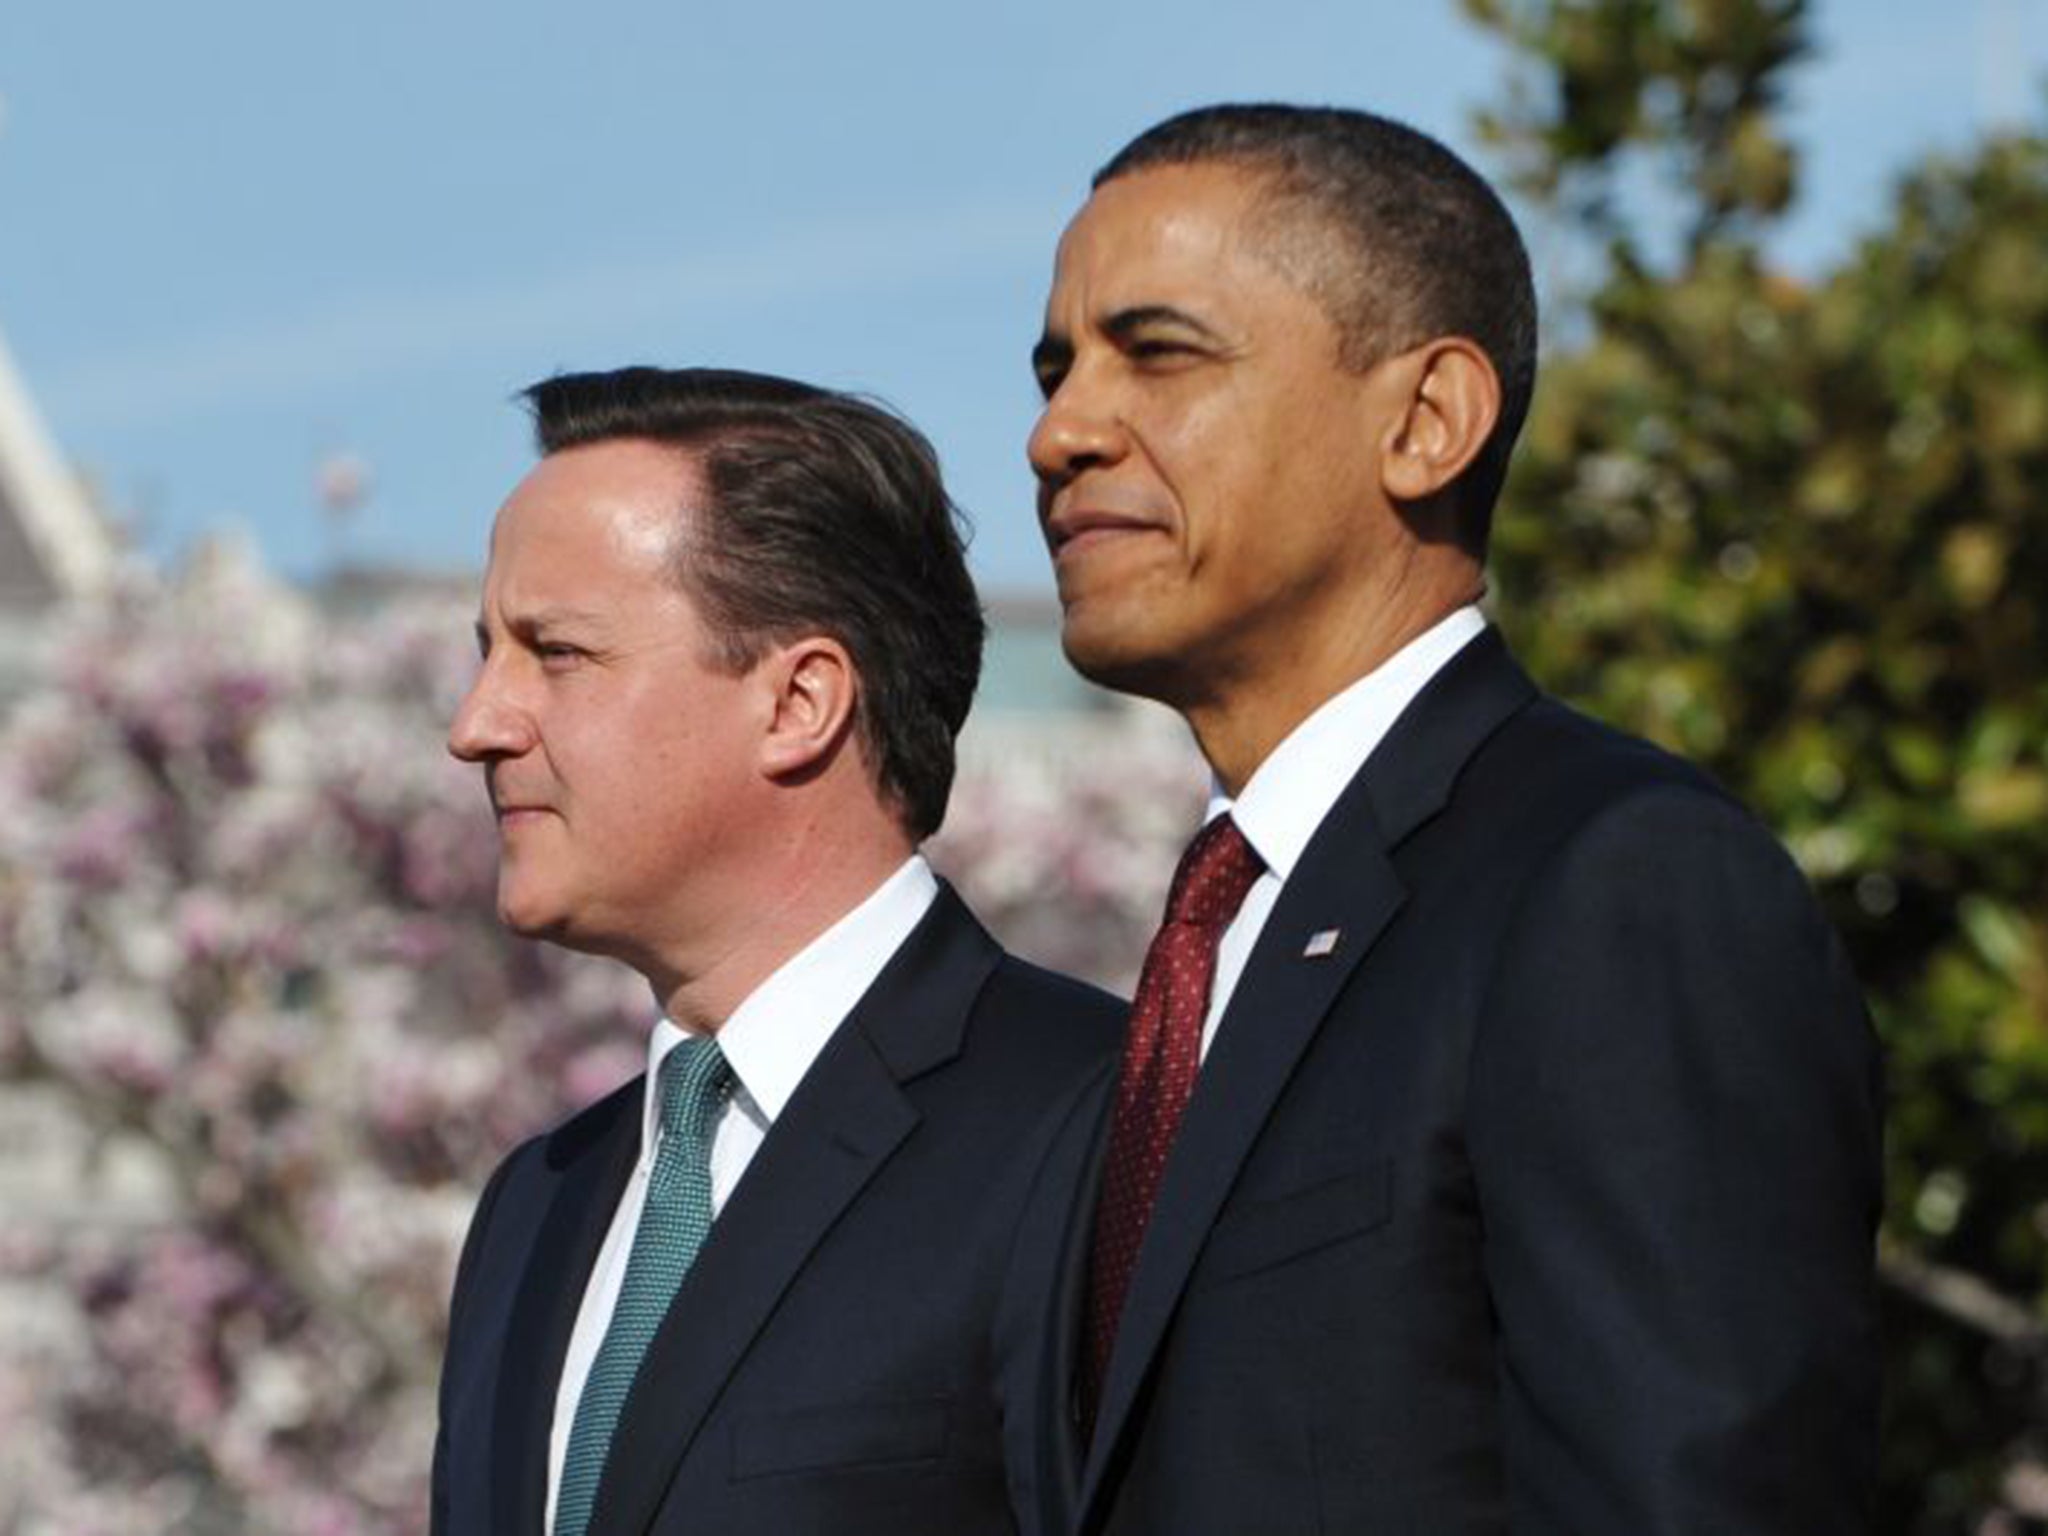 David Cameron and Barack Obama have pledged to work together (AFP/Getty)